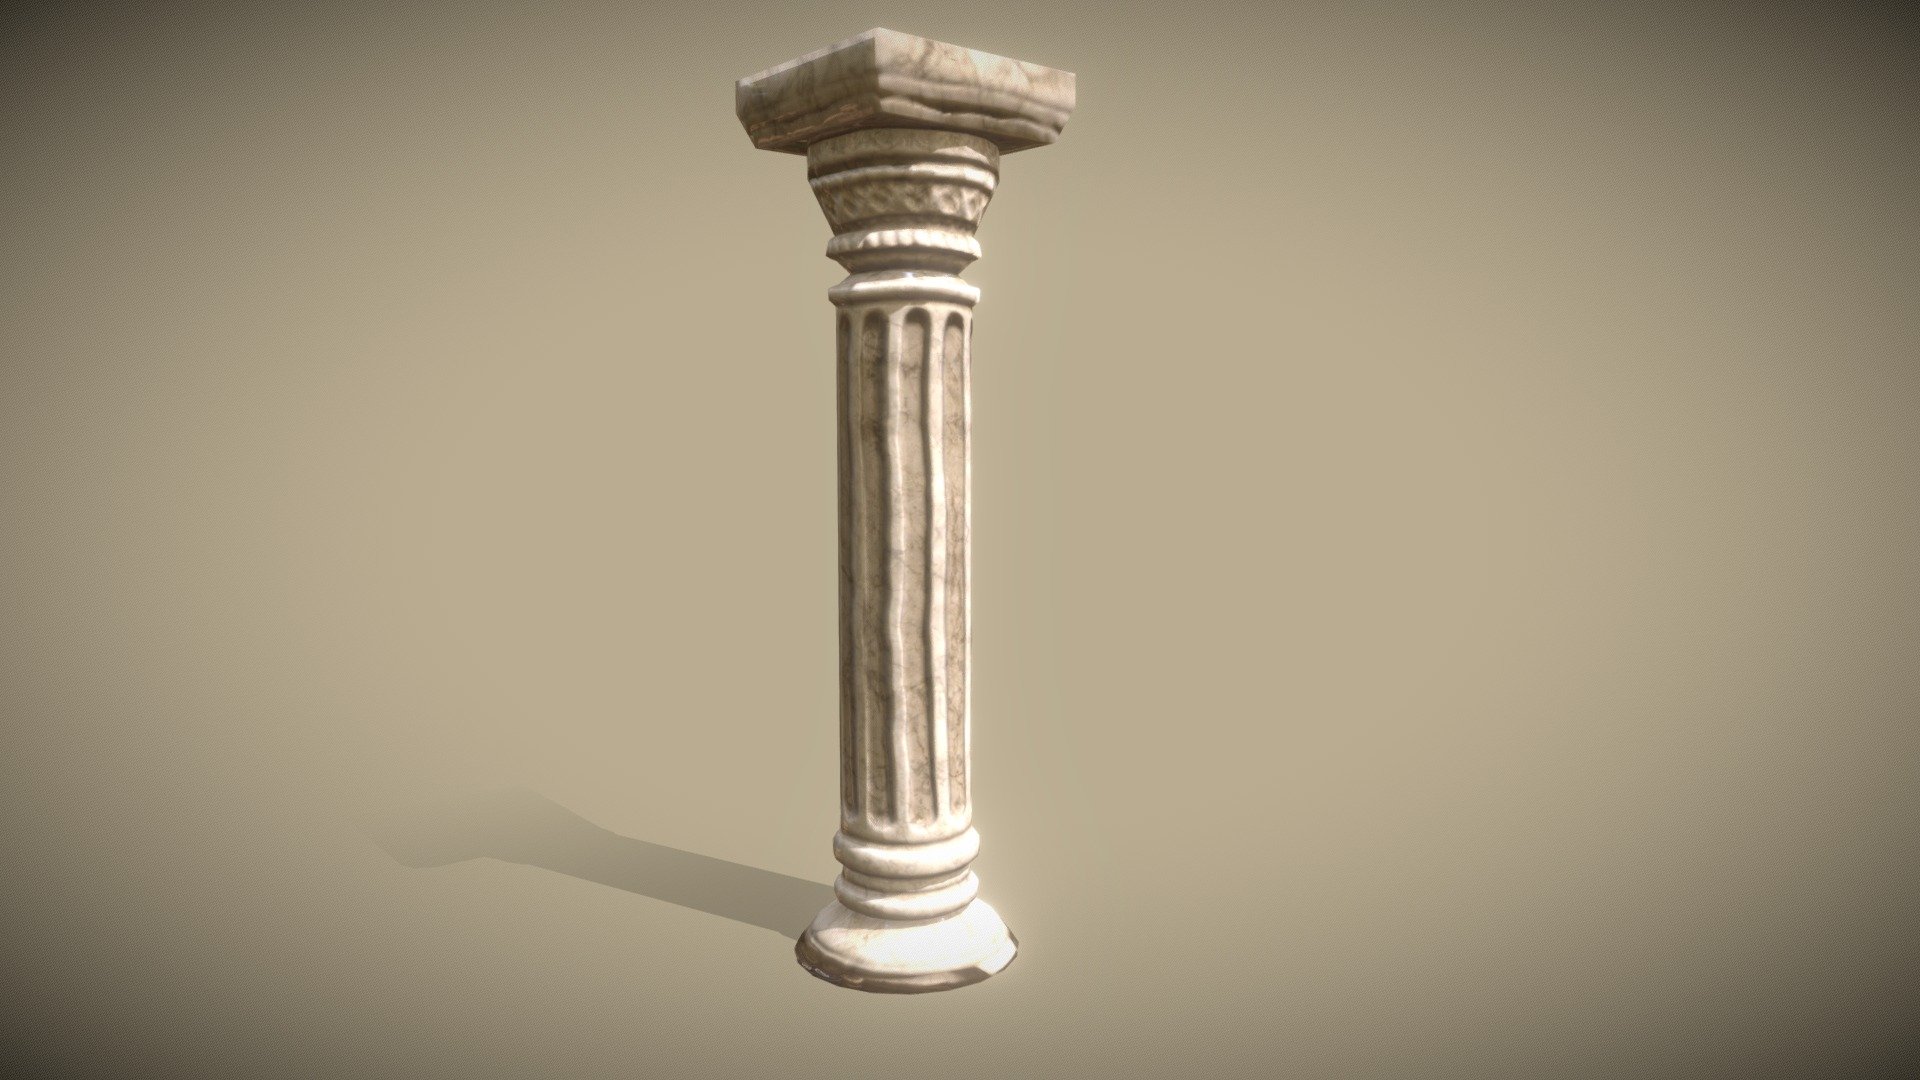 Proptober Day 7: Realistic Roman Pillar